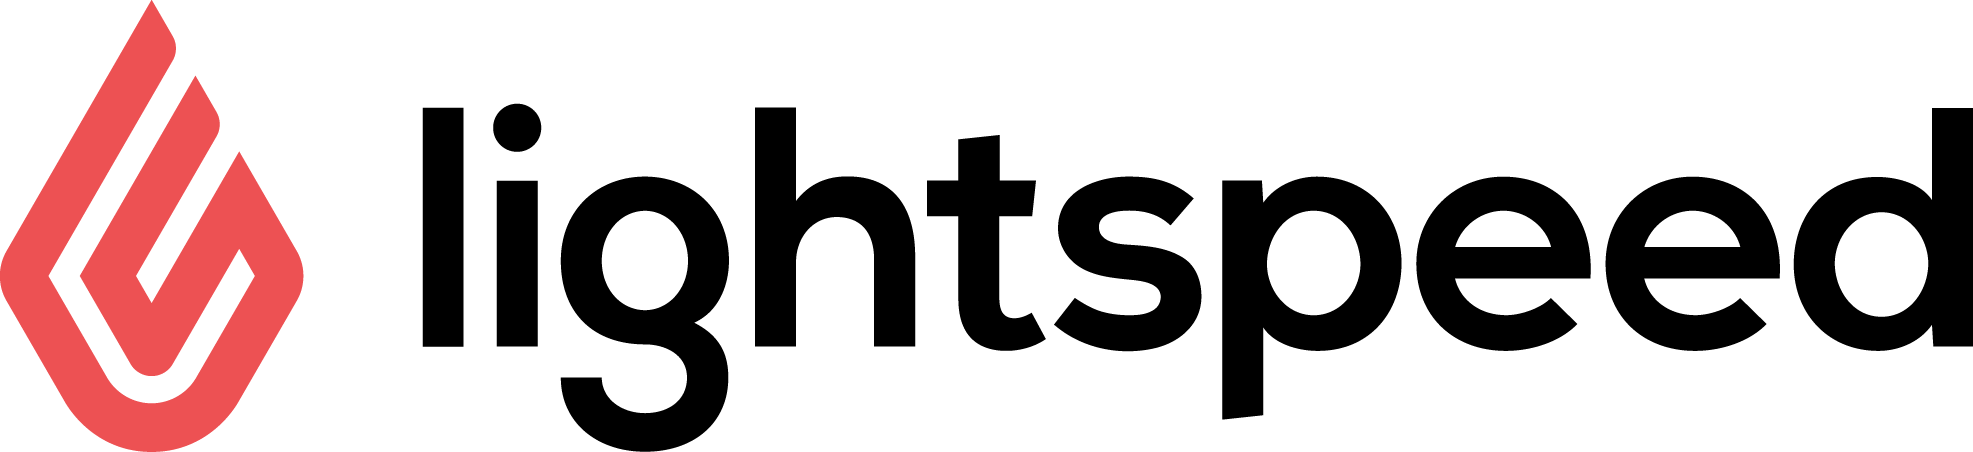 Lightspeed L-Series by Omniboost logo